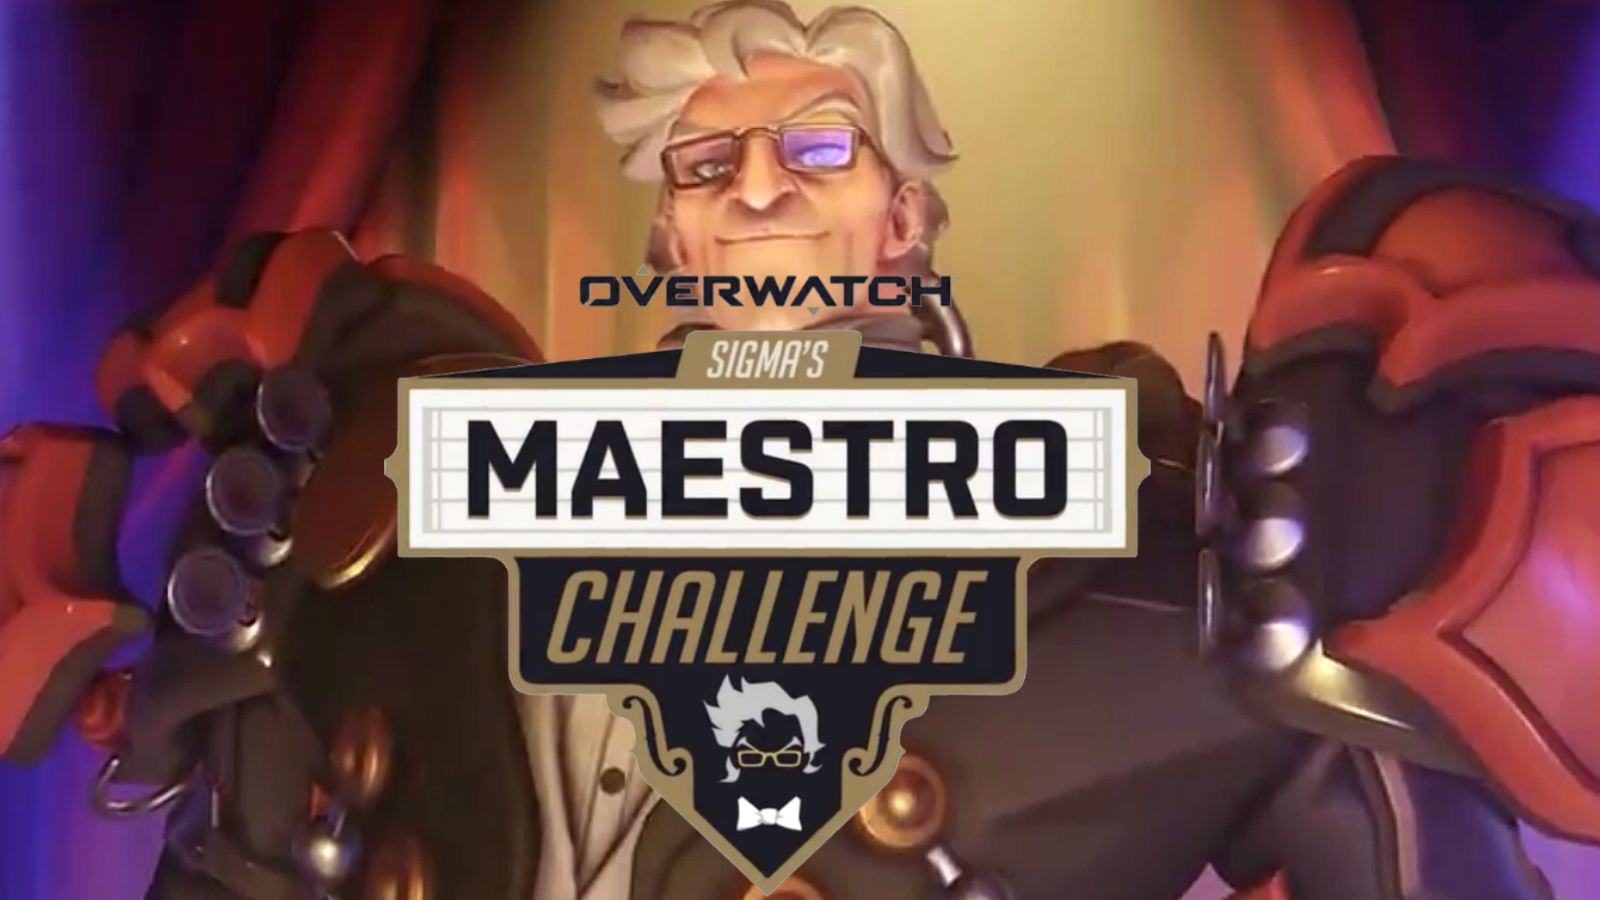 Overwatch Sigma Maestro Challenge goes live, offers new legendary